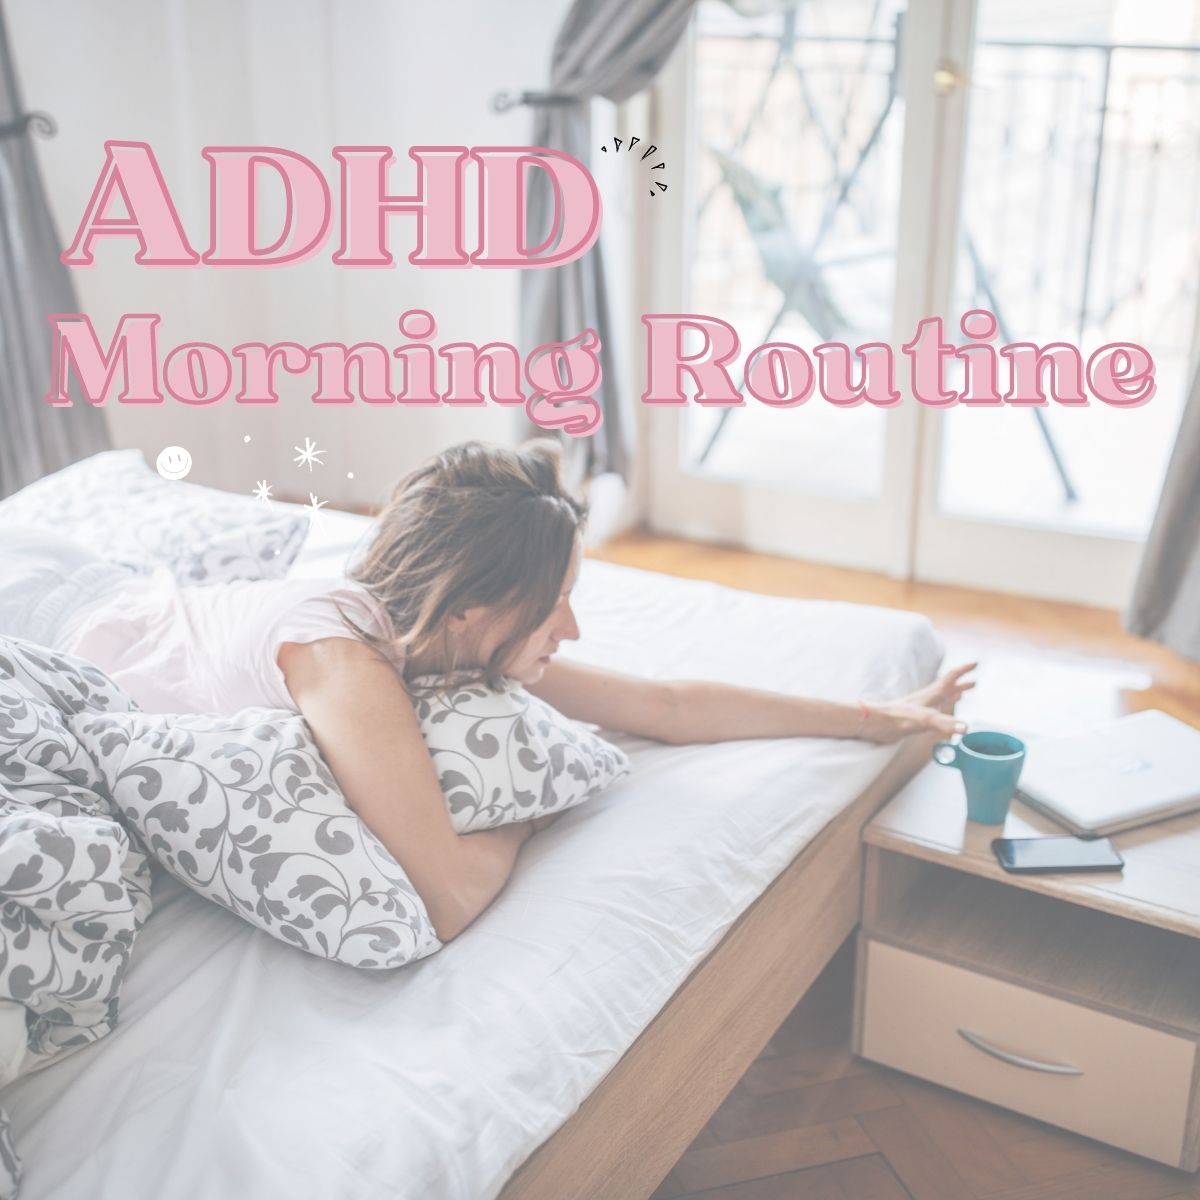 ADHD WOMAN MORNING ROUTINE